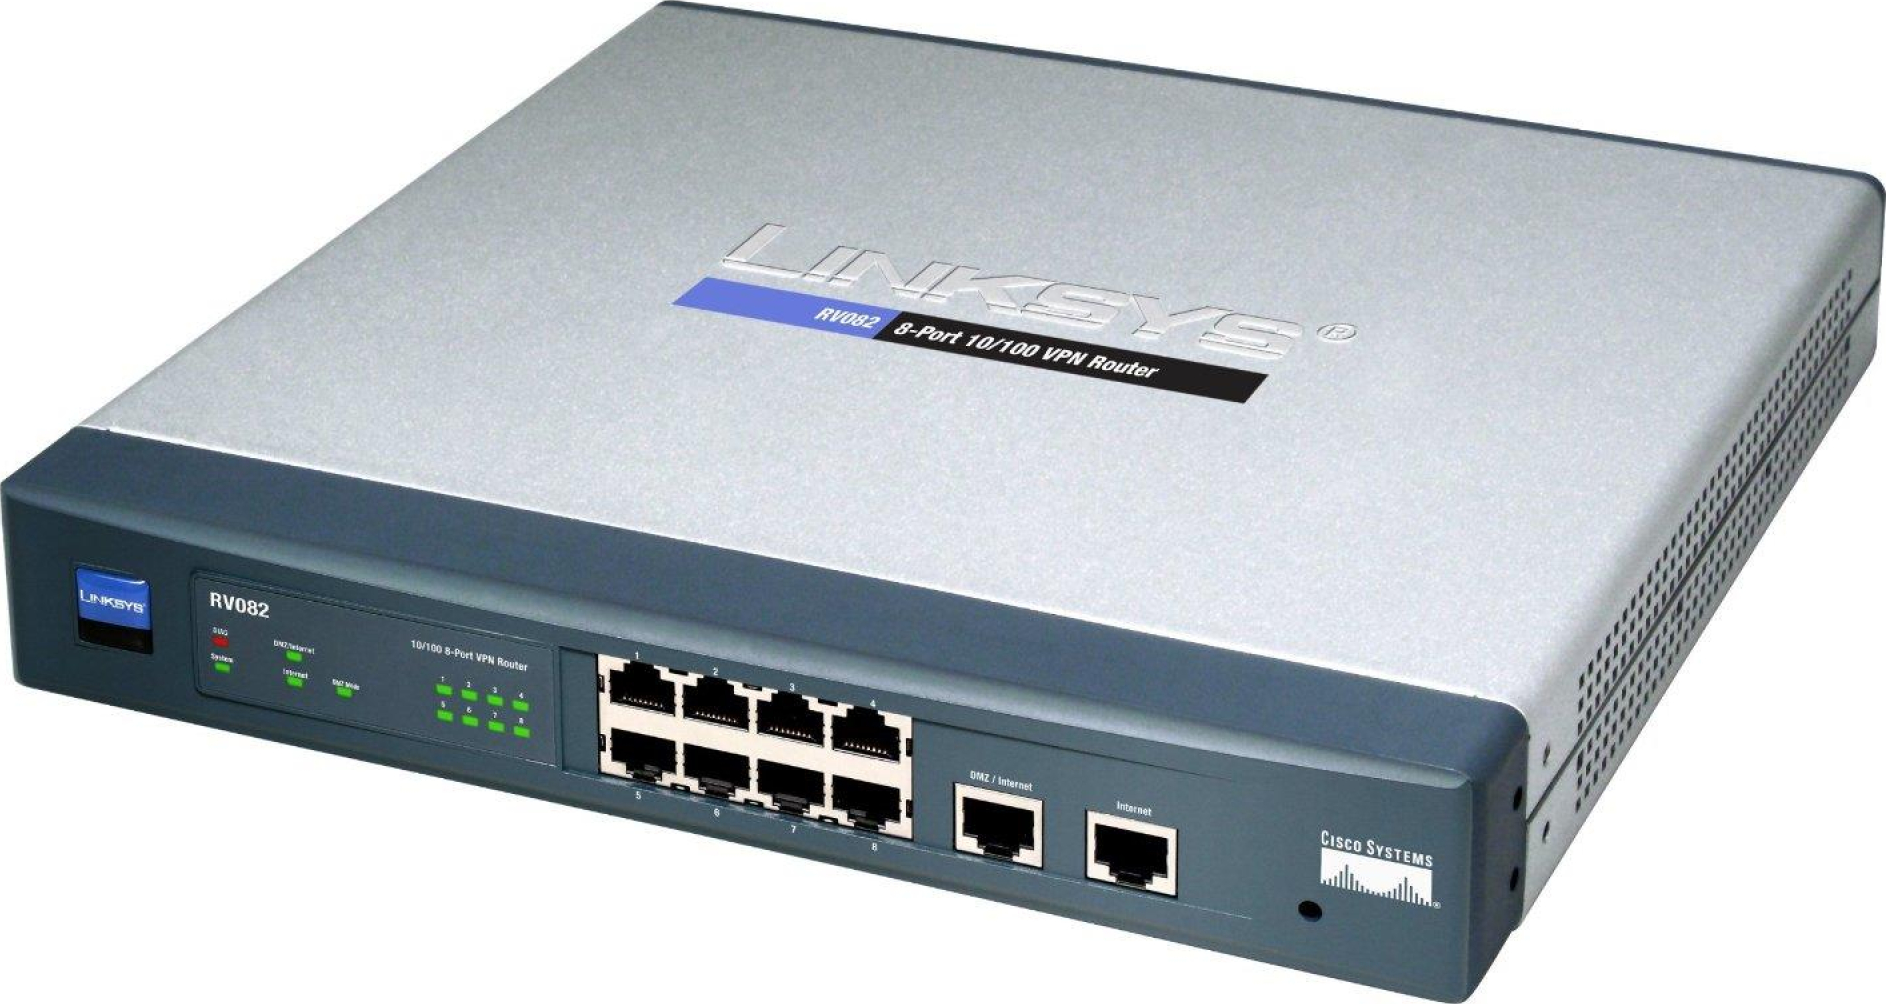 Cisco RV082 (Linksys)